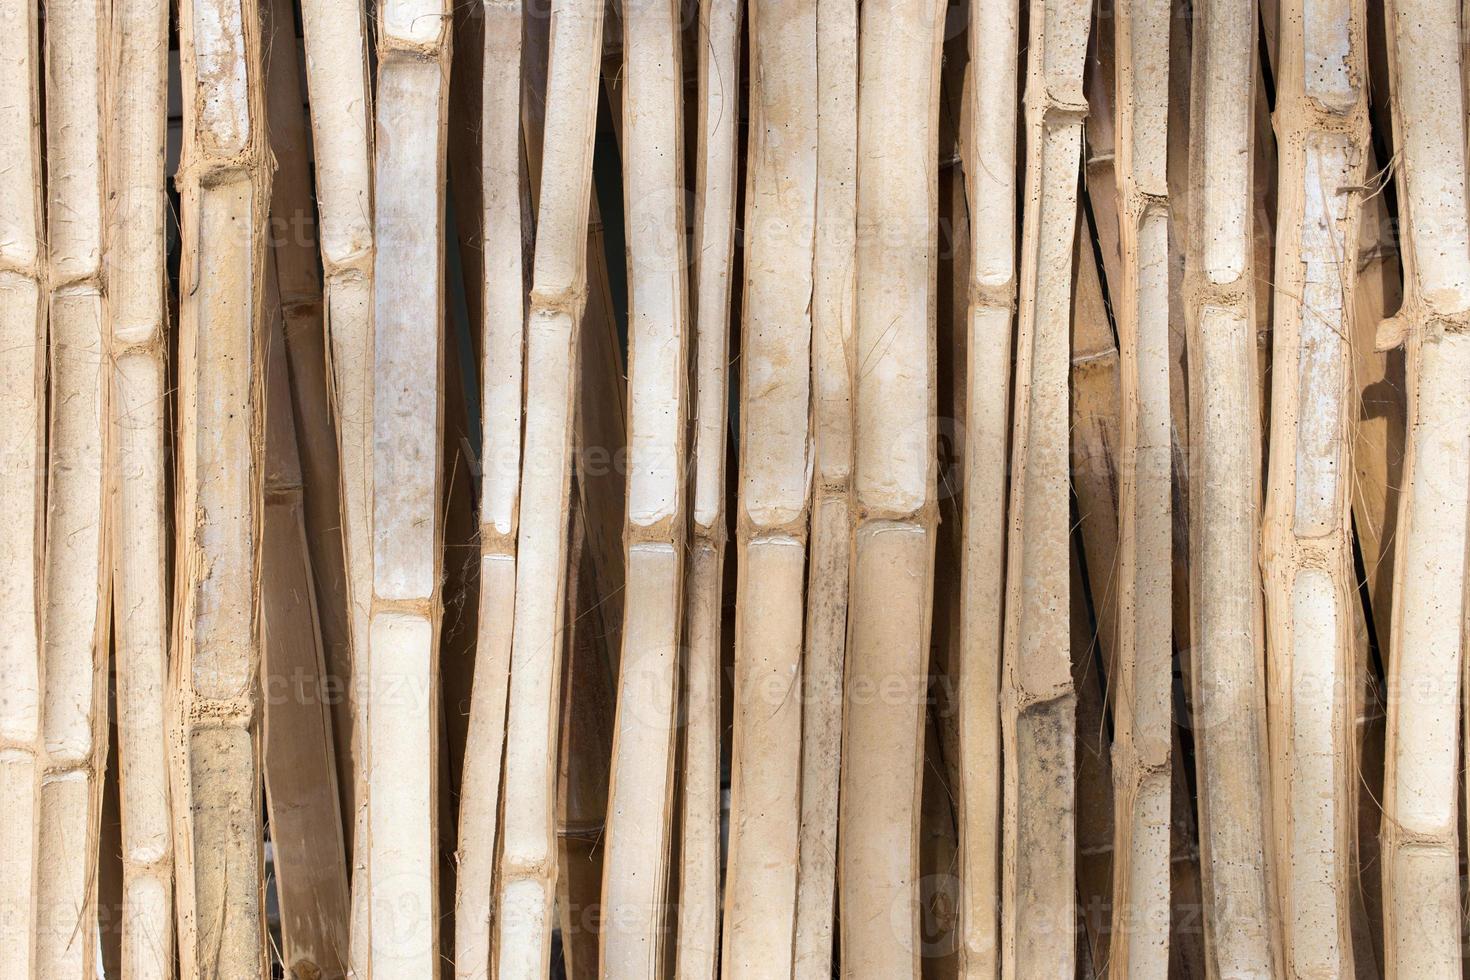 inside bamboo texture wood background photo